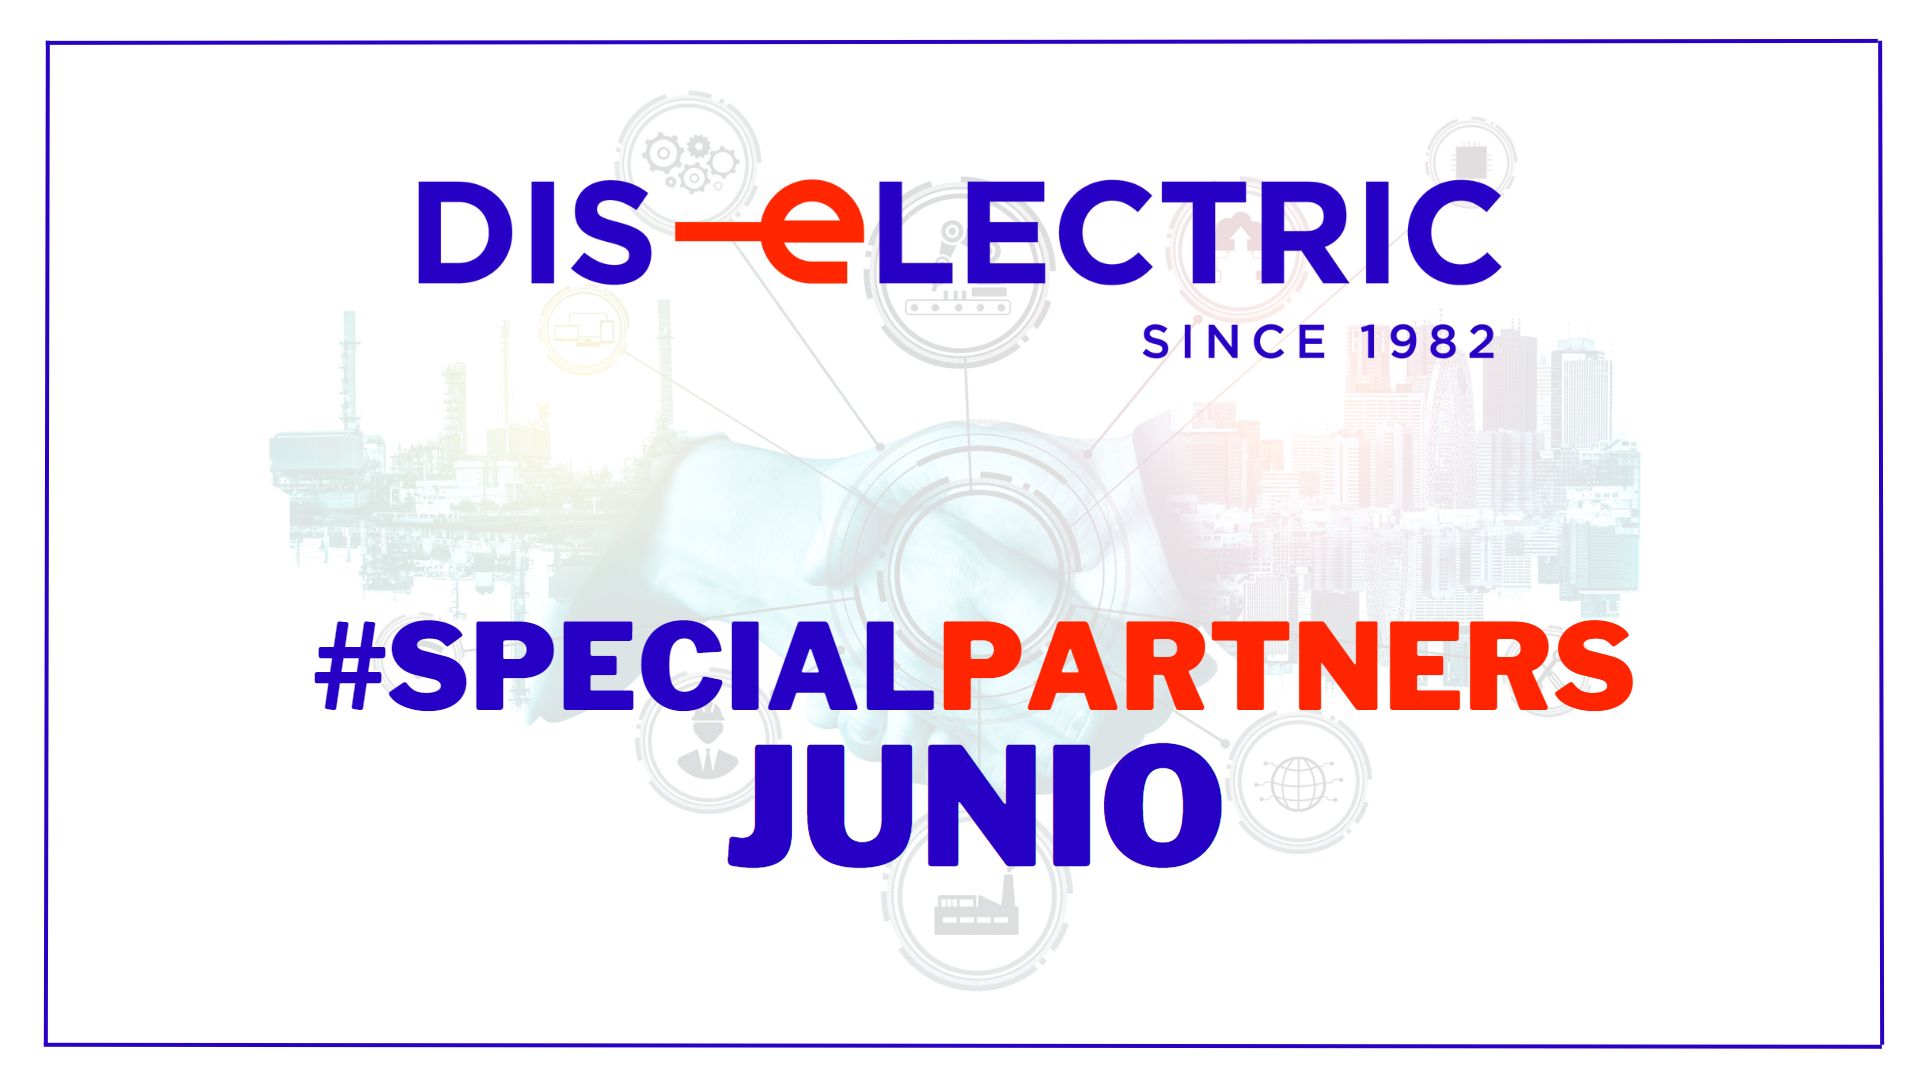 Special Partners JUNIO